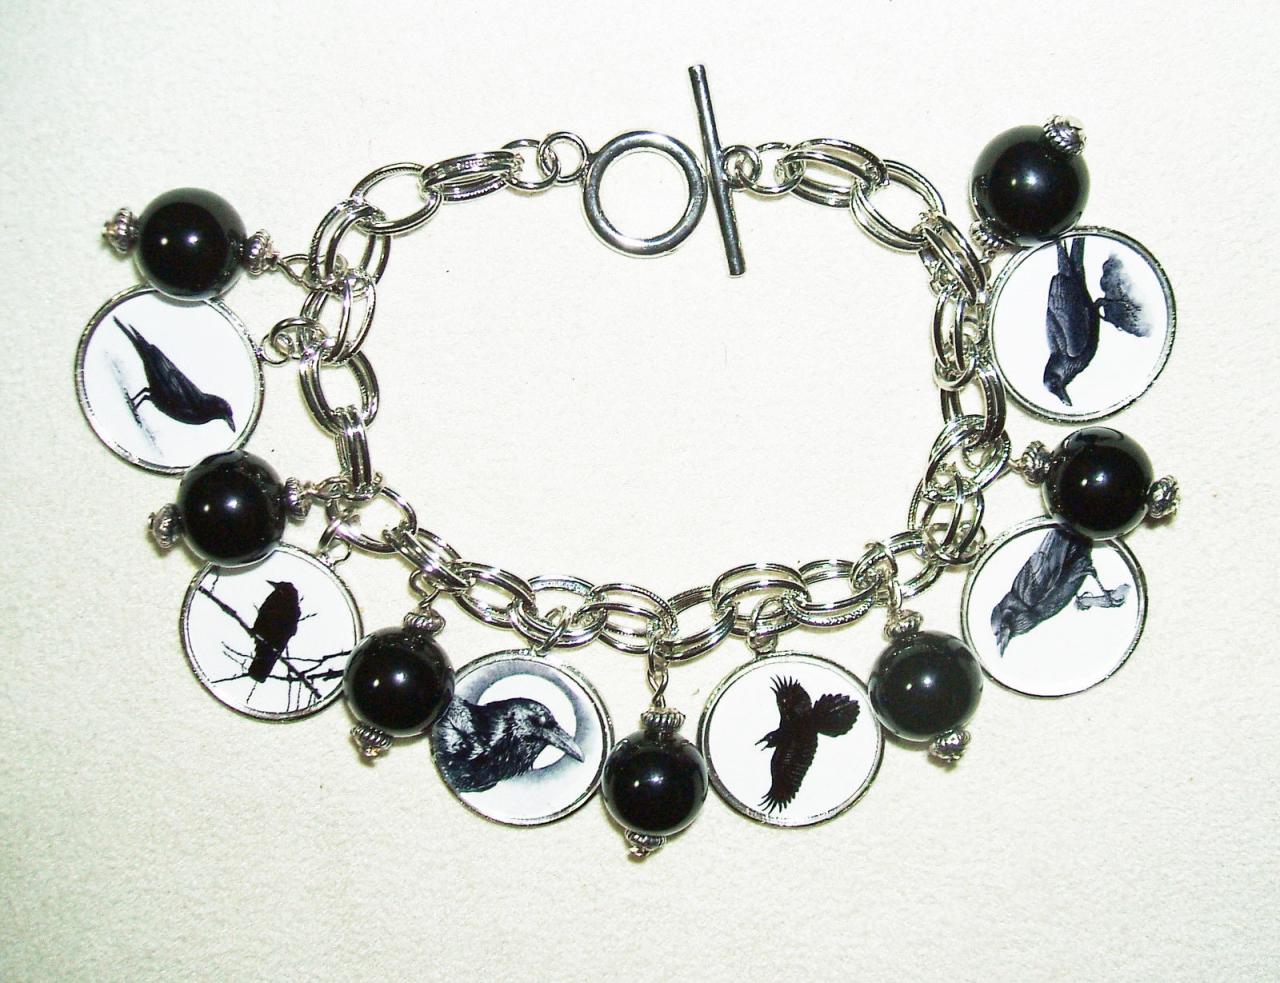 Crow Raven Black Bird Charm Bracelet Altered Art